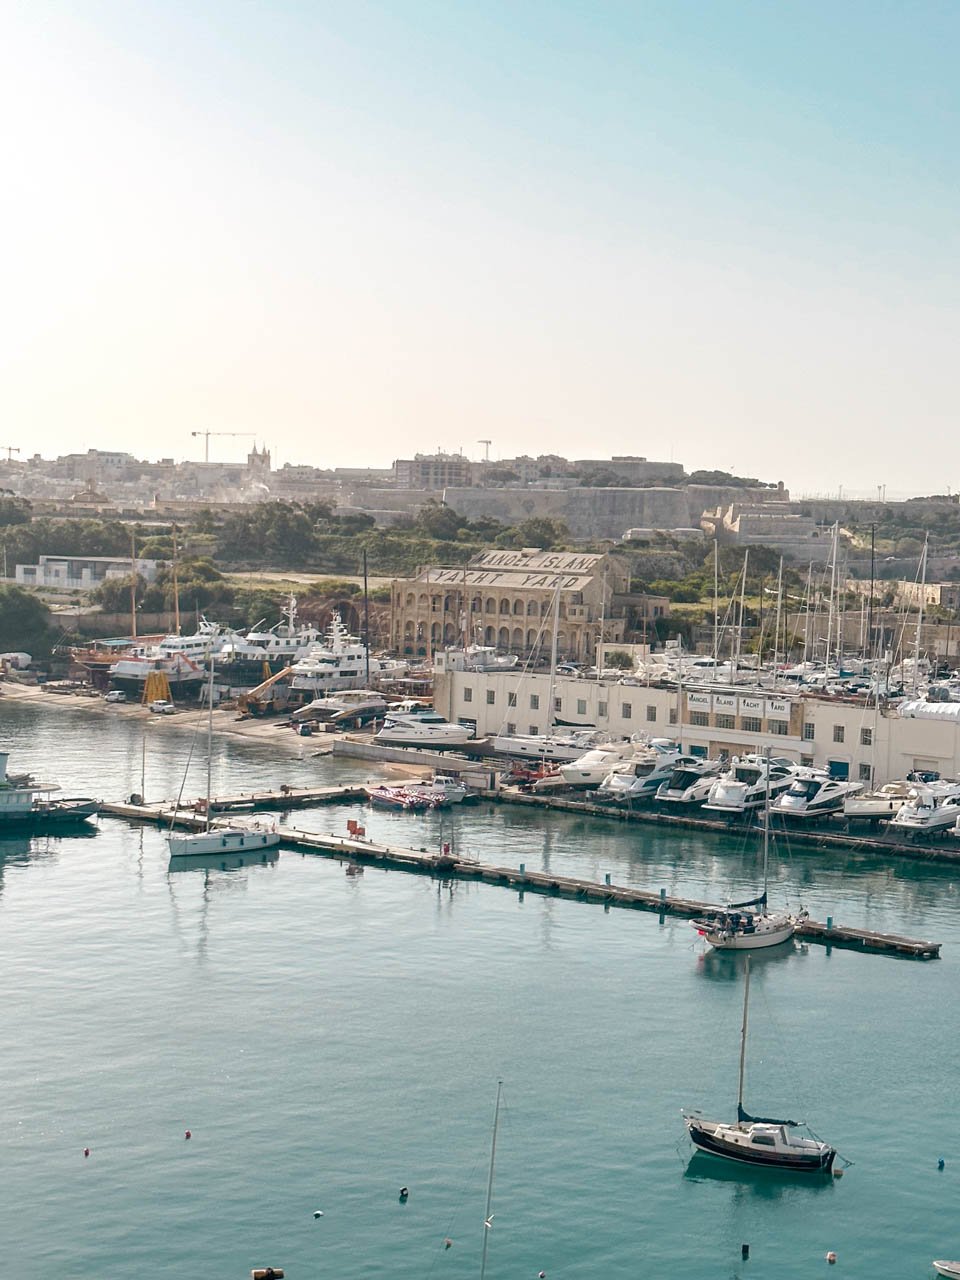 Manoel Island Yacht Yard seen from above